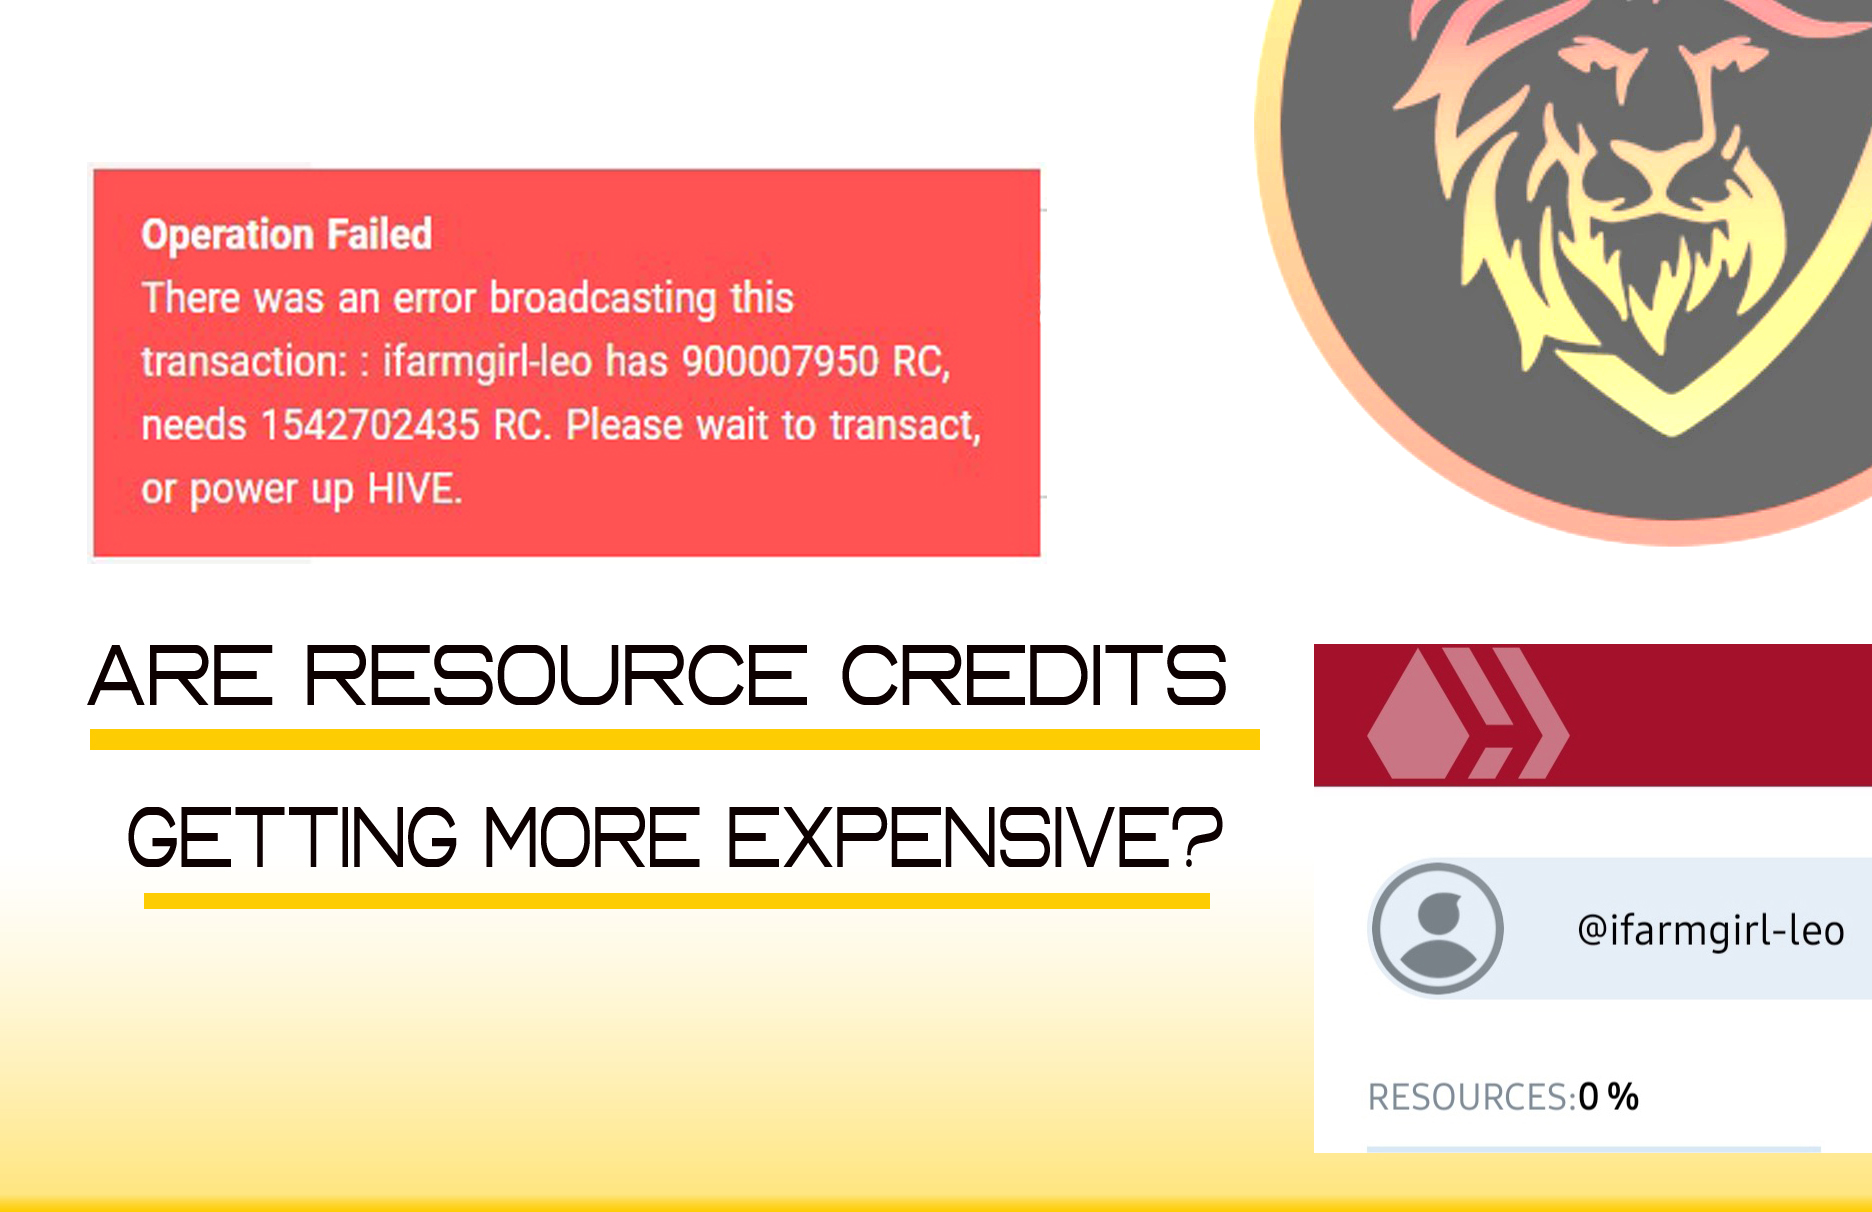 @ifarmgirl-leo/are-resource-credits-getting-expensive